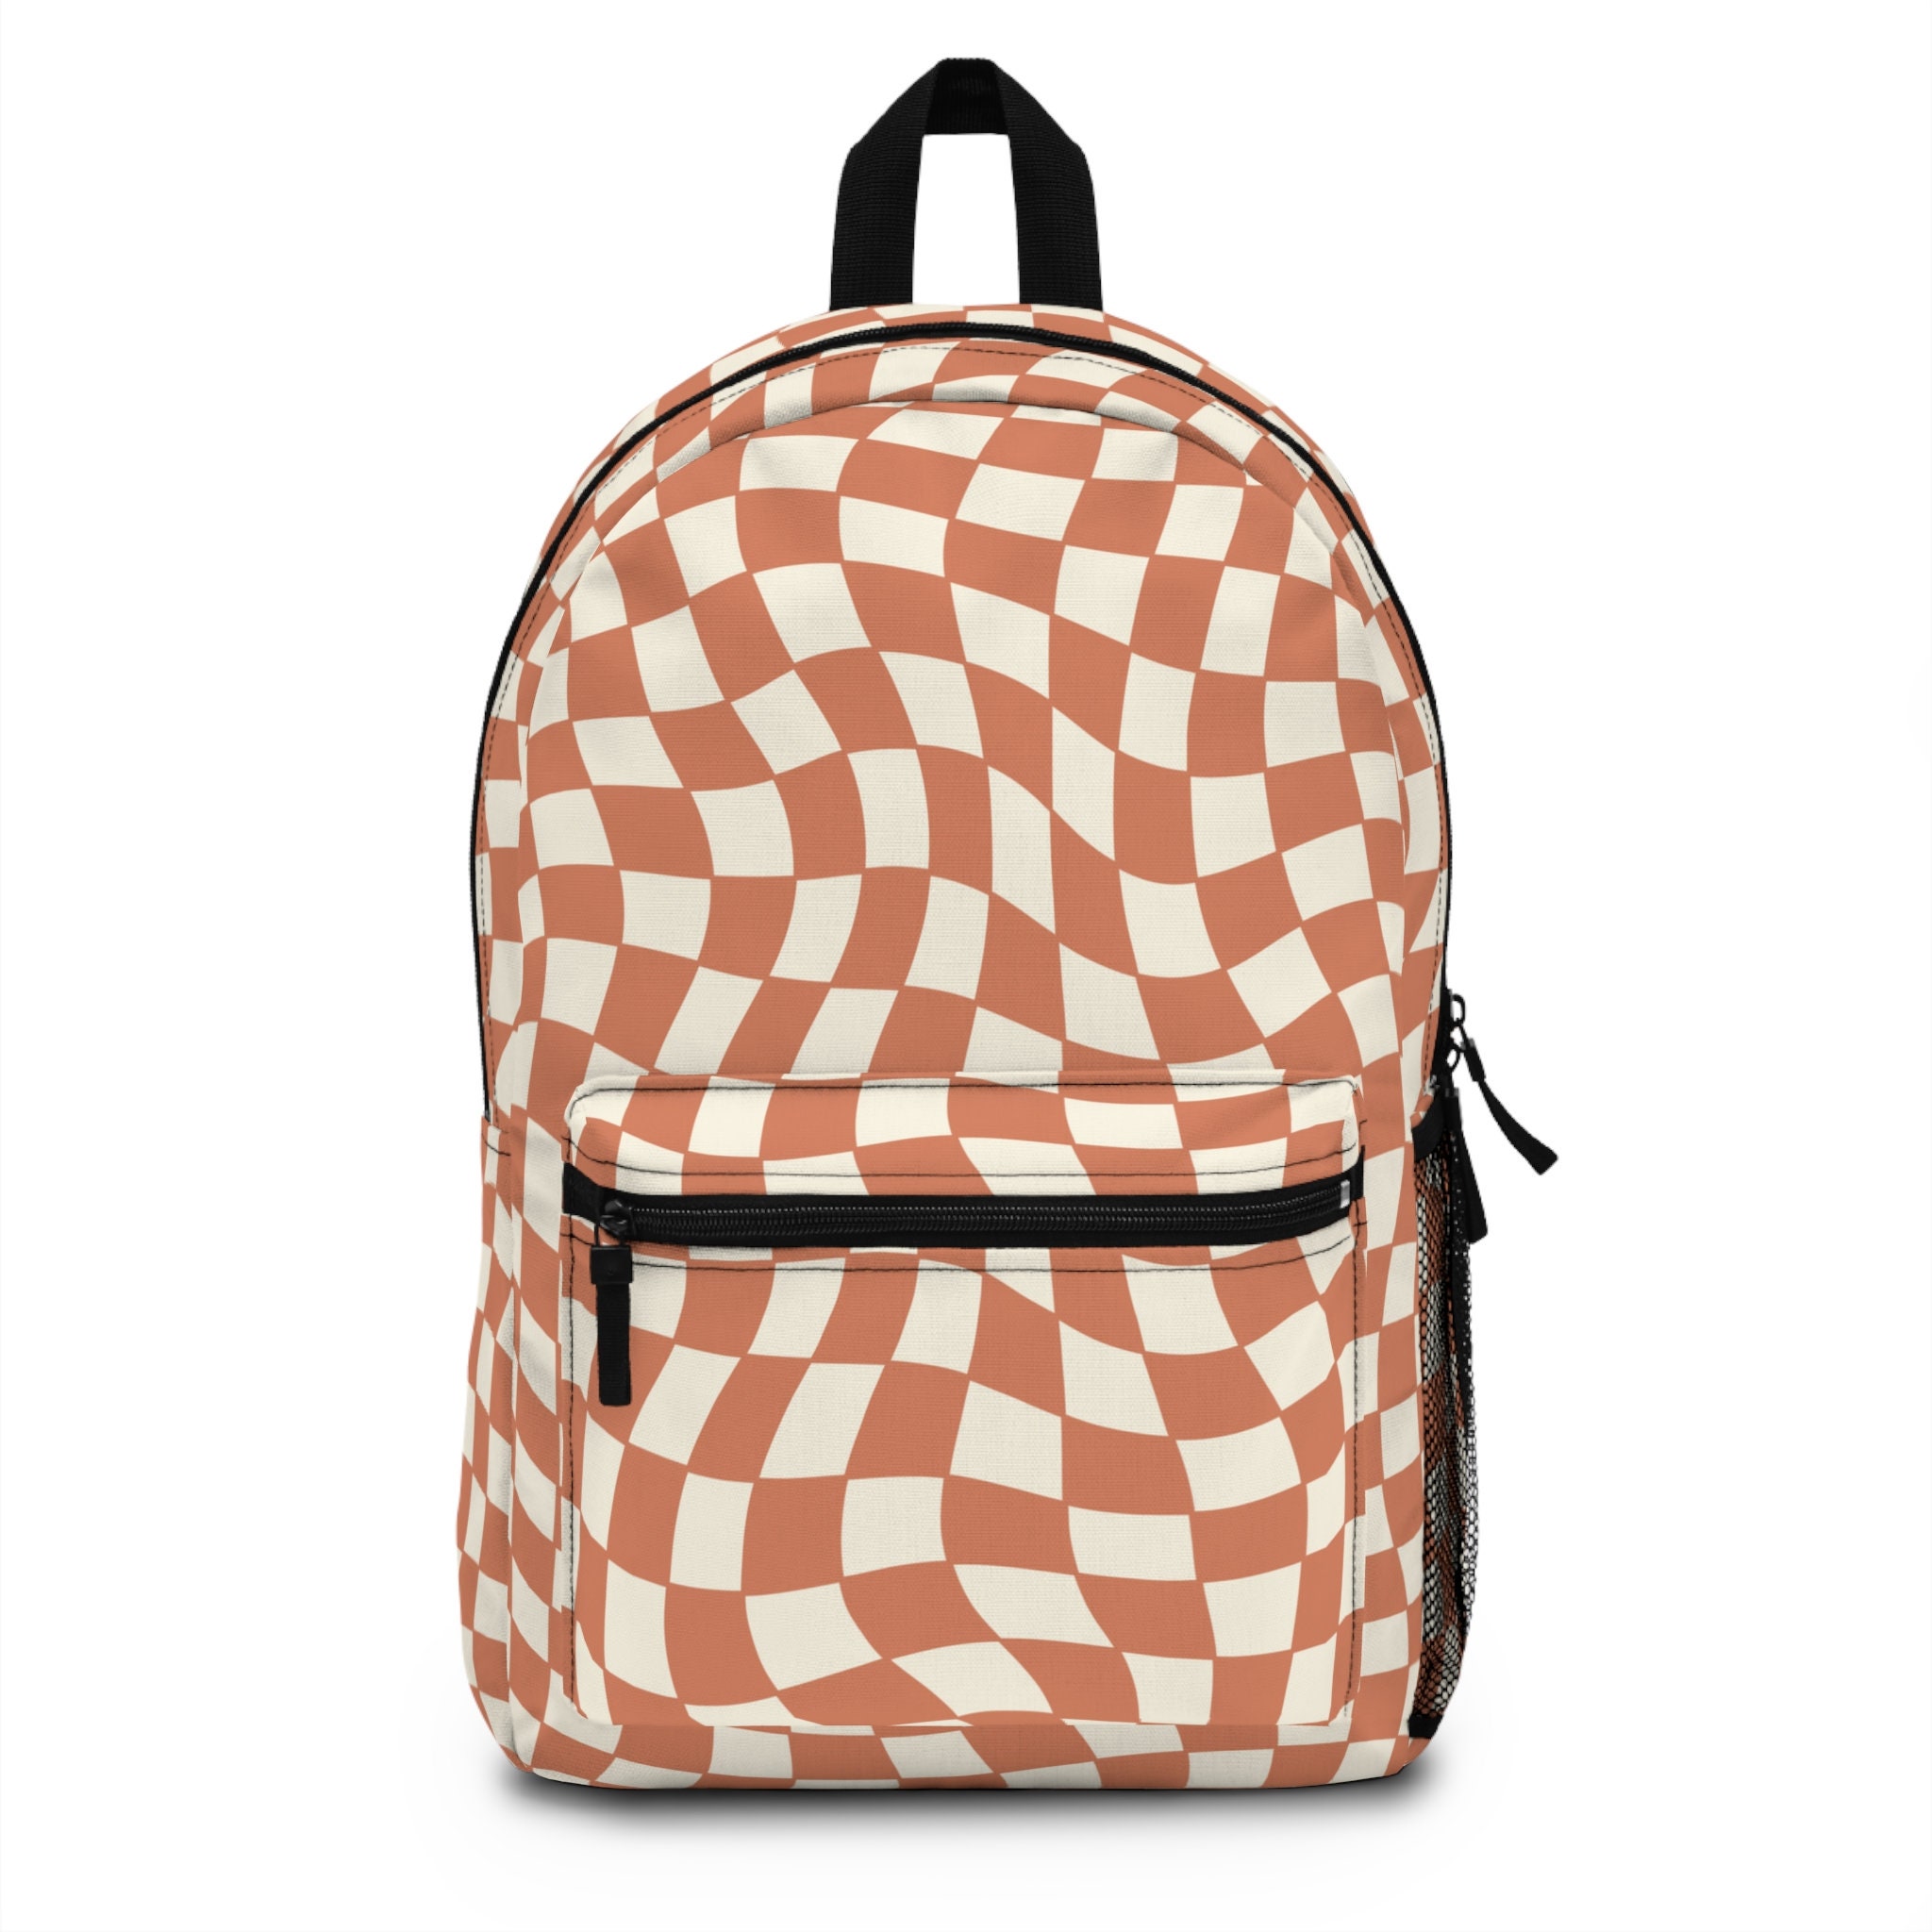 Retro Wavy Orange and Cream Checkered Backpack 